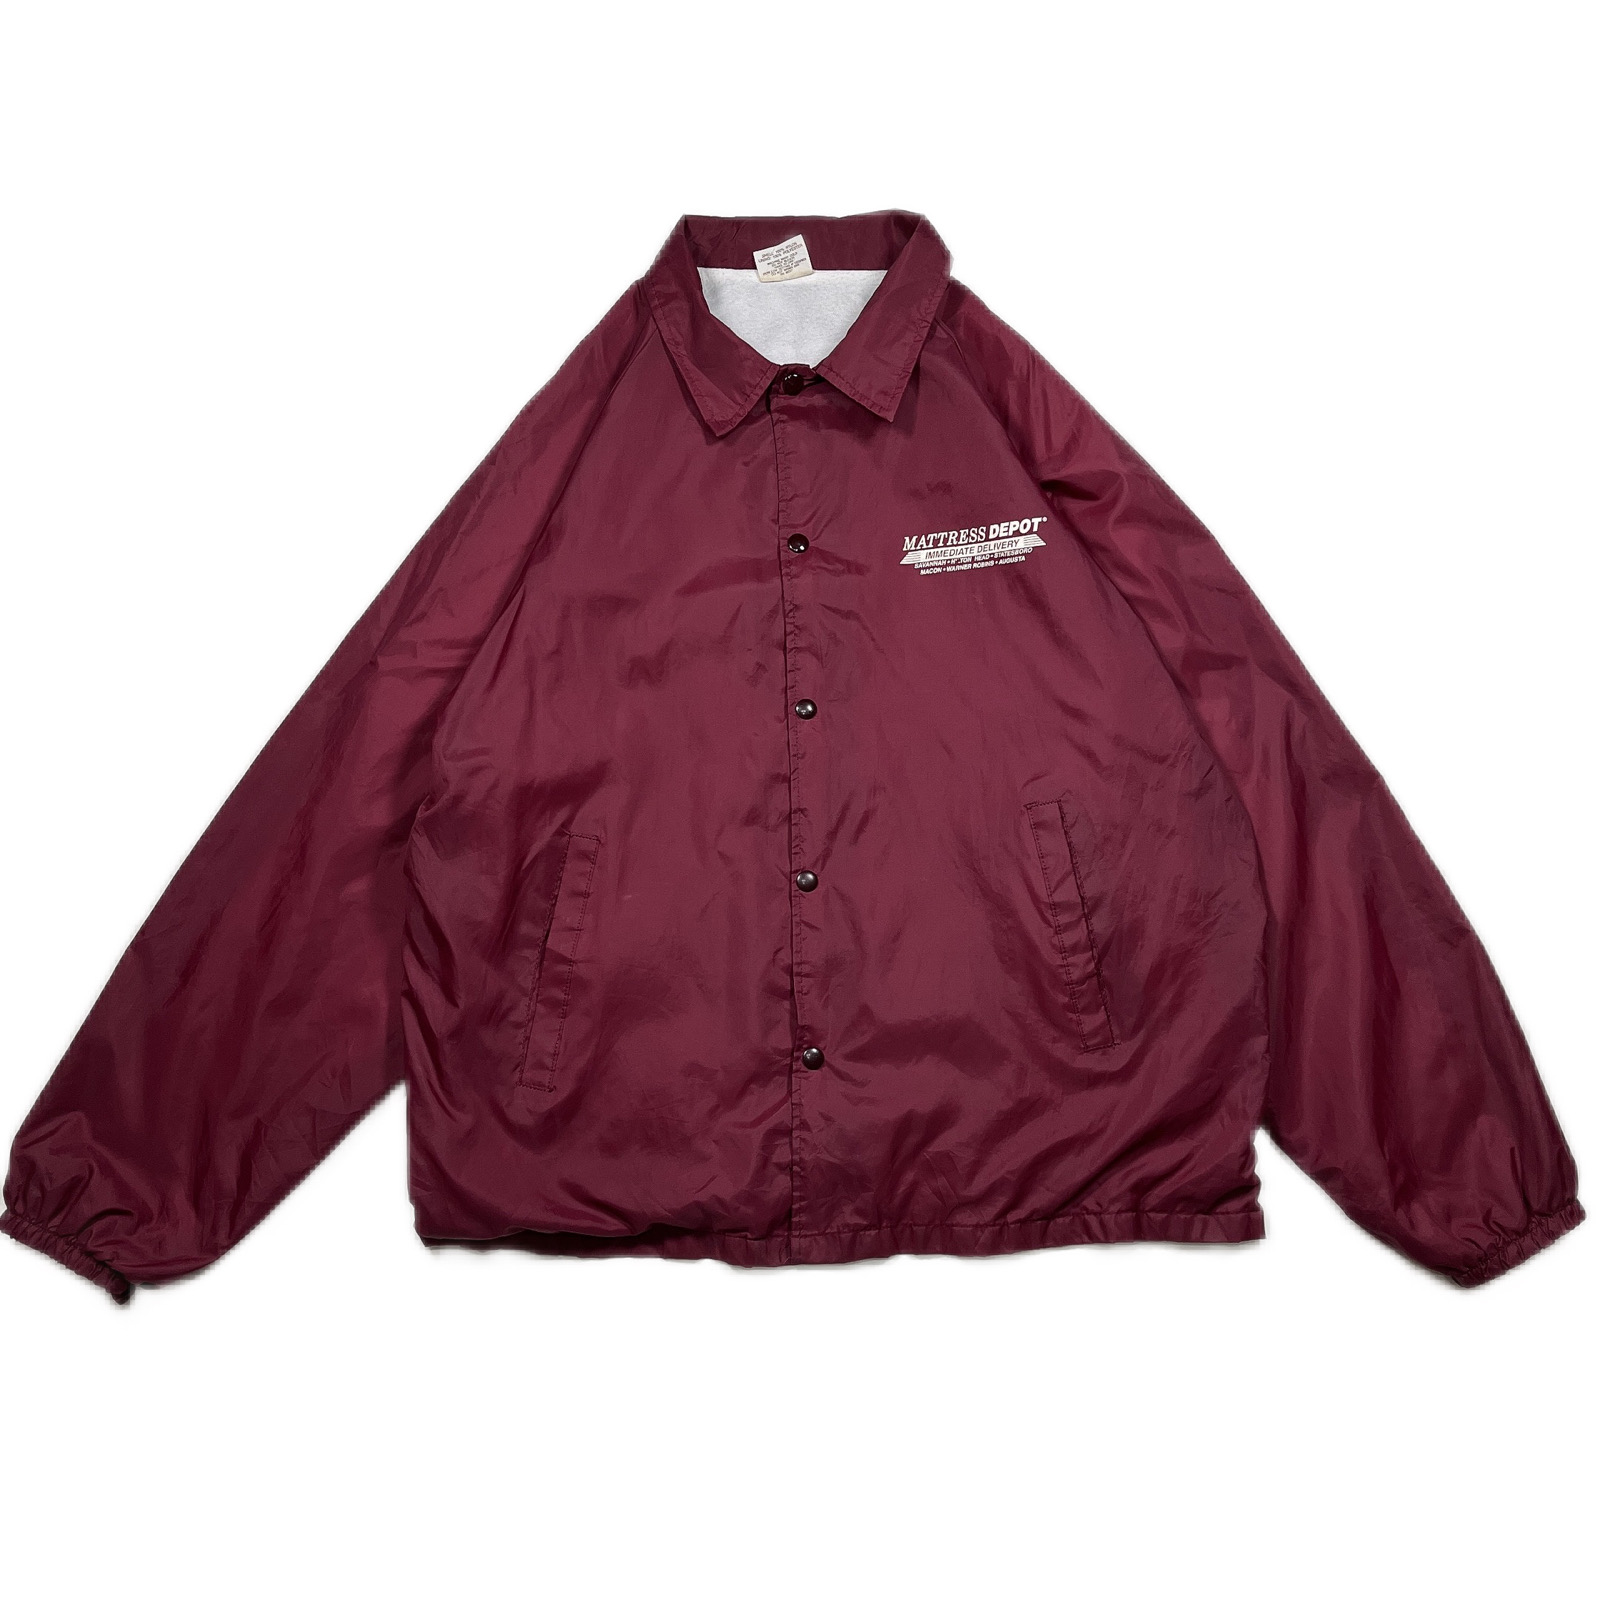 XLsize coach jacket 231008012 XLサイズ コーチジャケット ナイロン